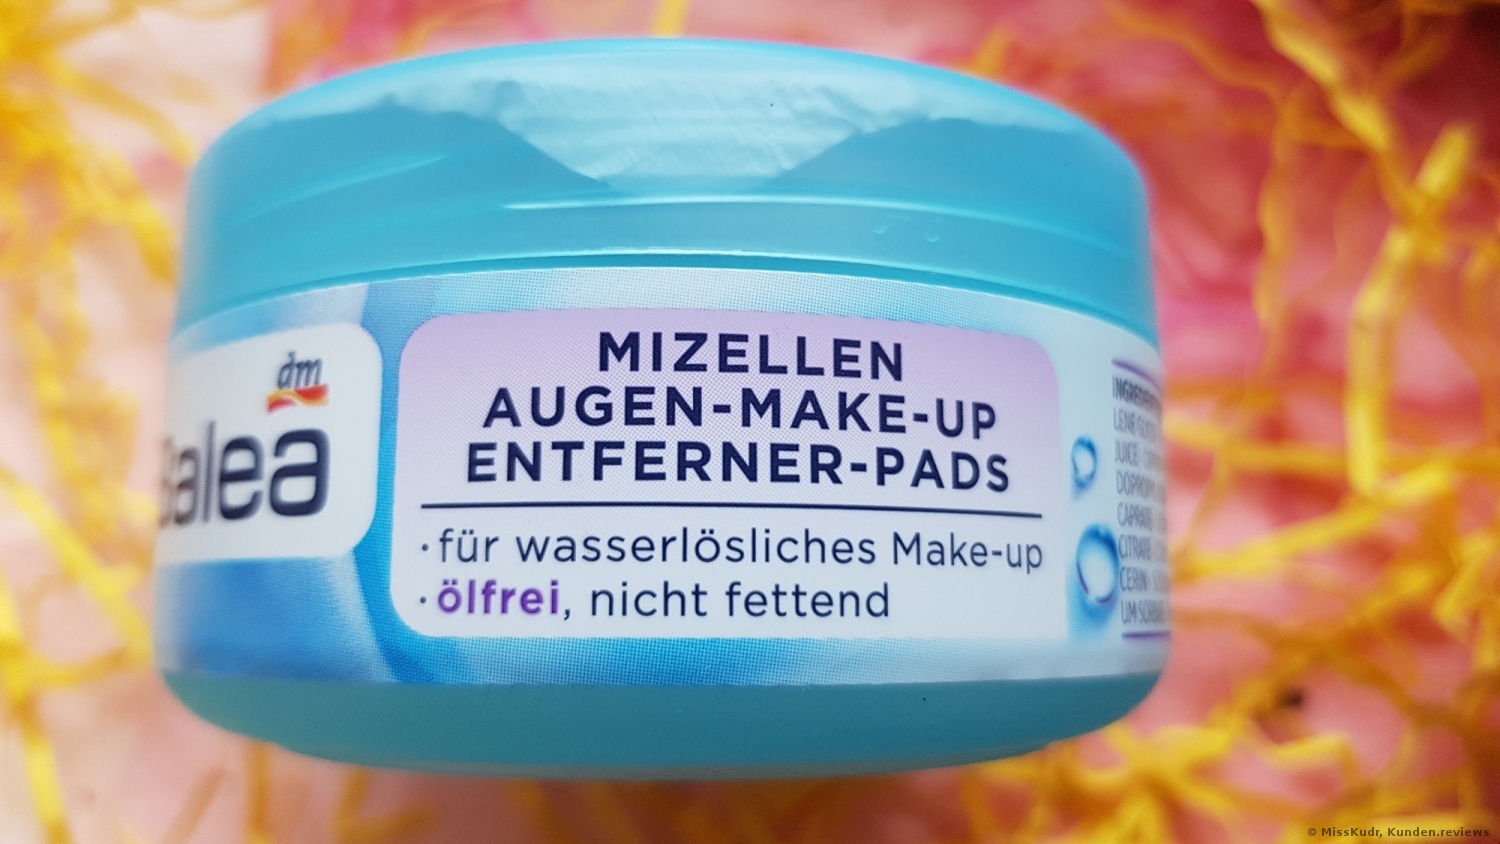  Balea Mizellen Augen-Make-up Entferner-Pads